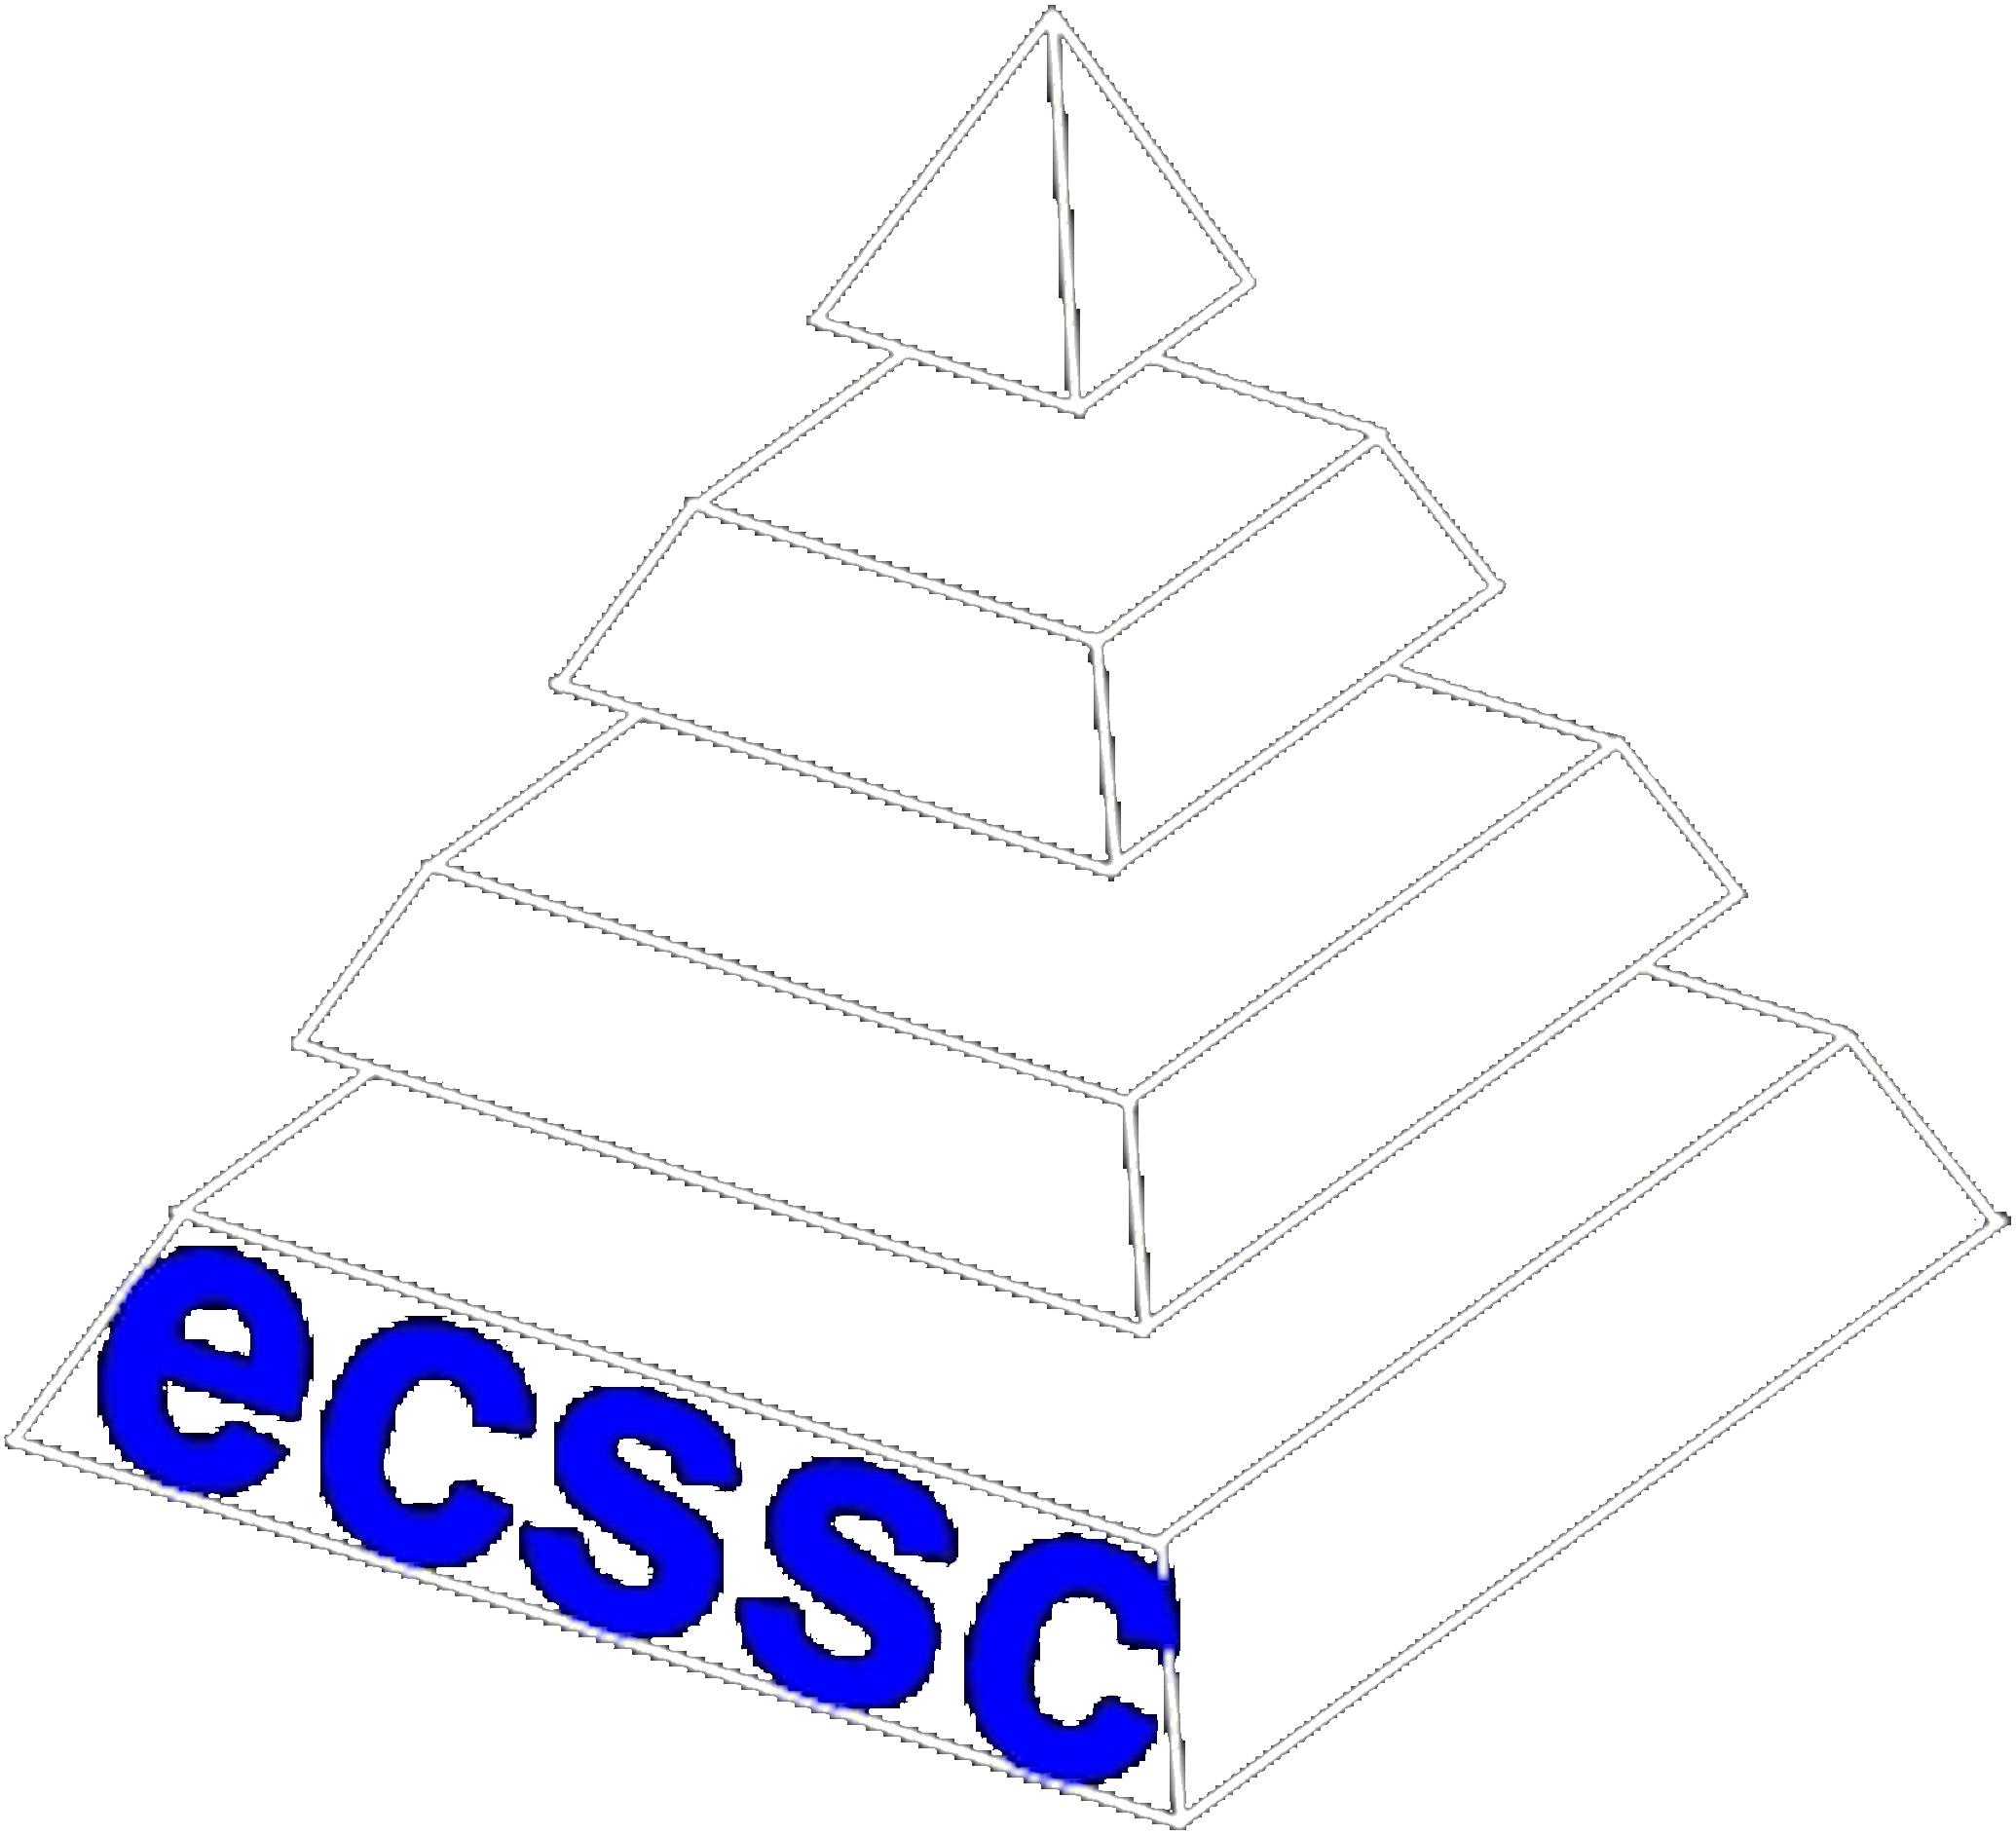 ECSSC logo